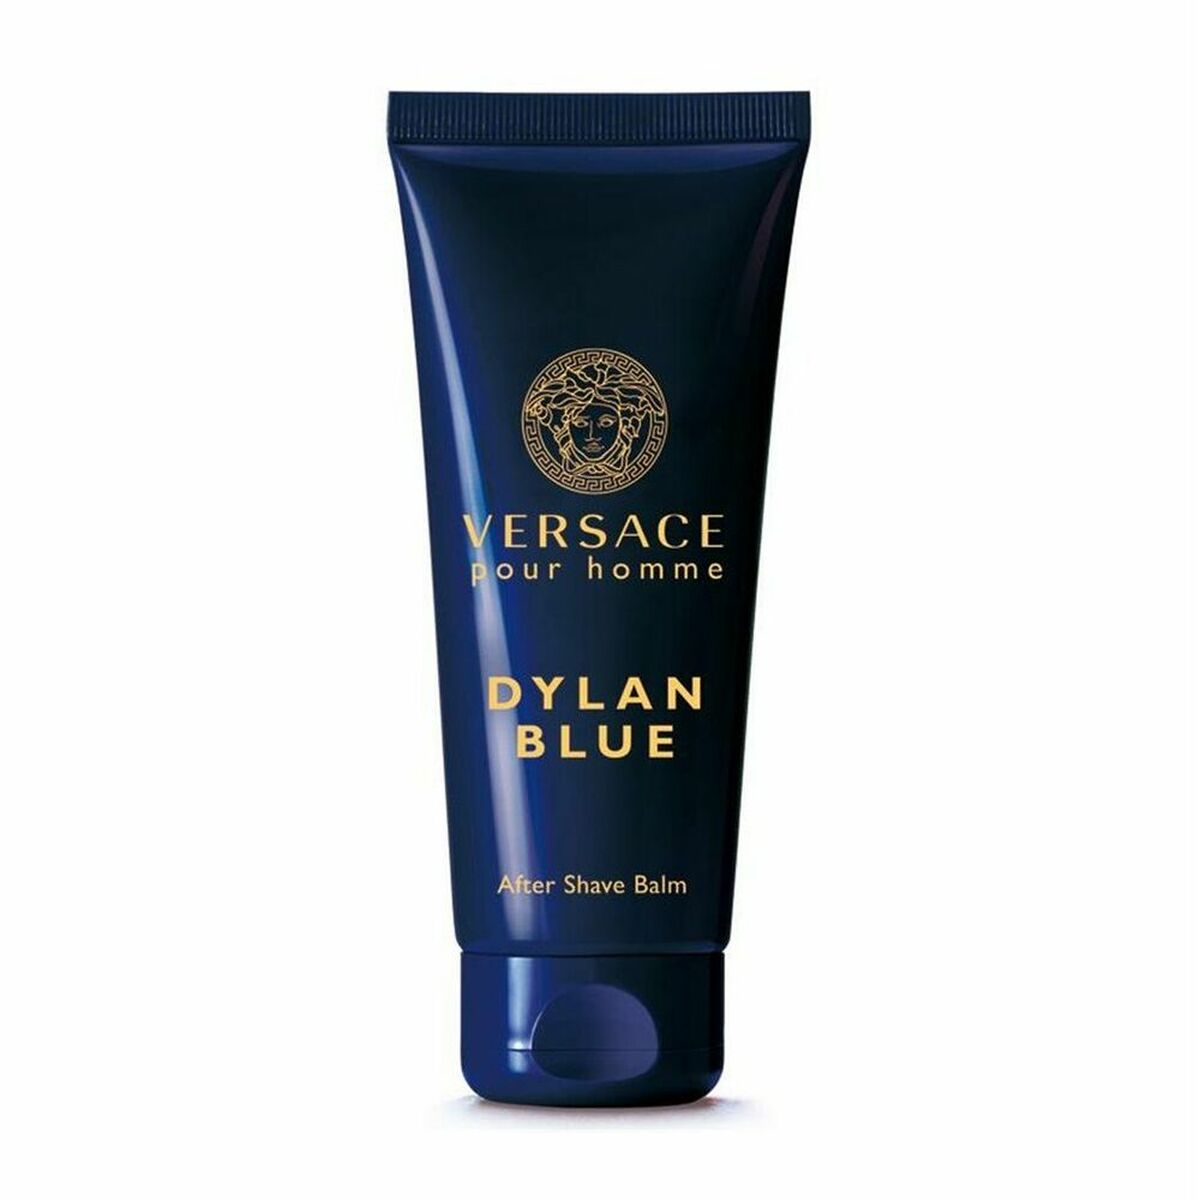 Baume après-rasage Versace Dylan Blue (100 ml)